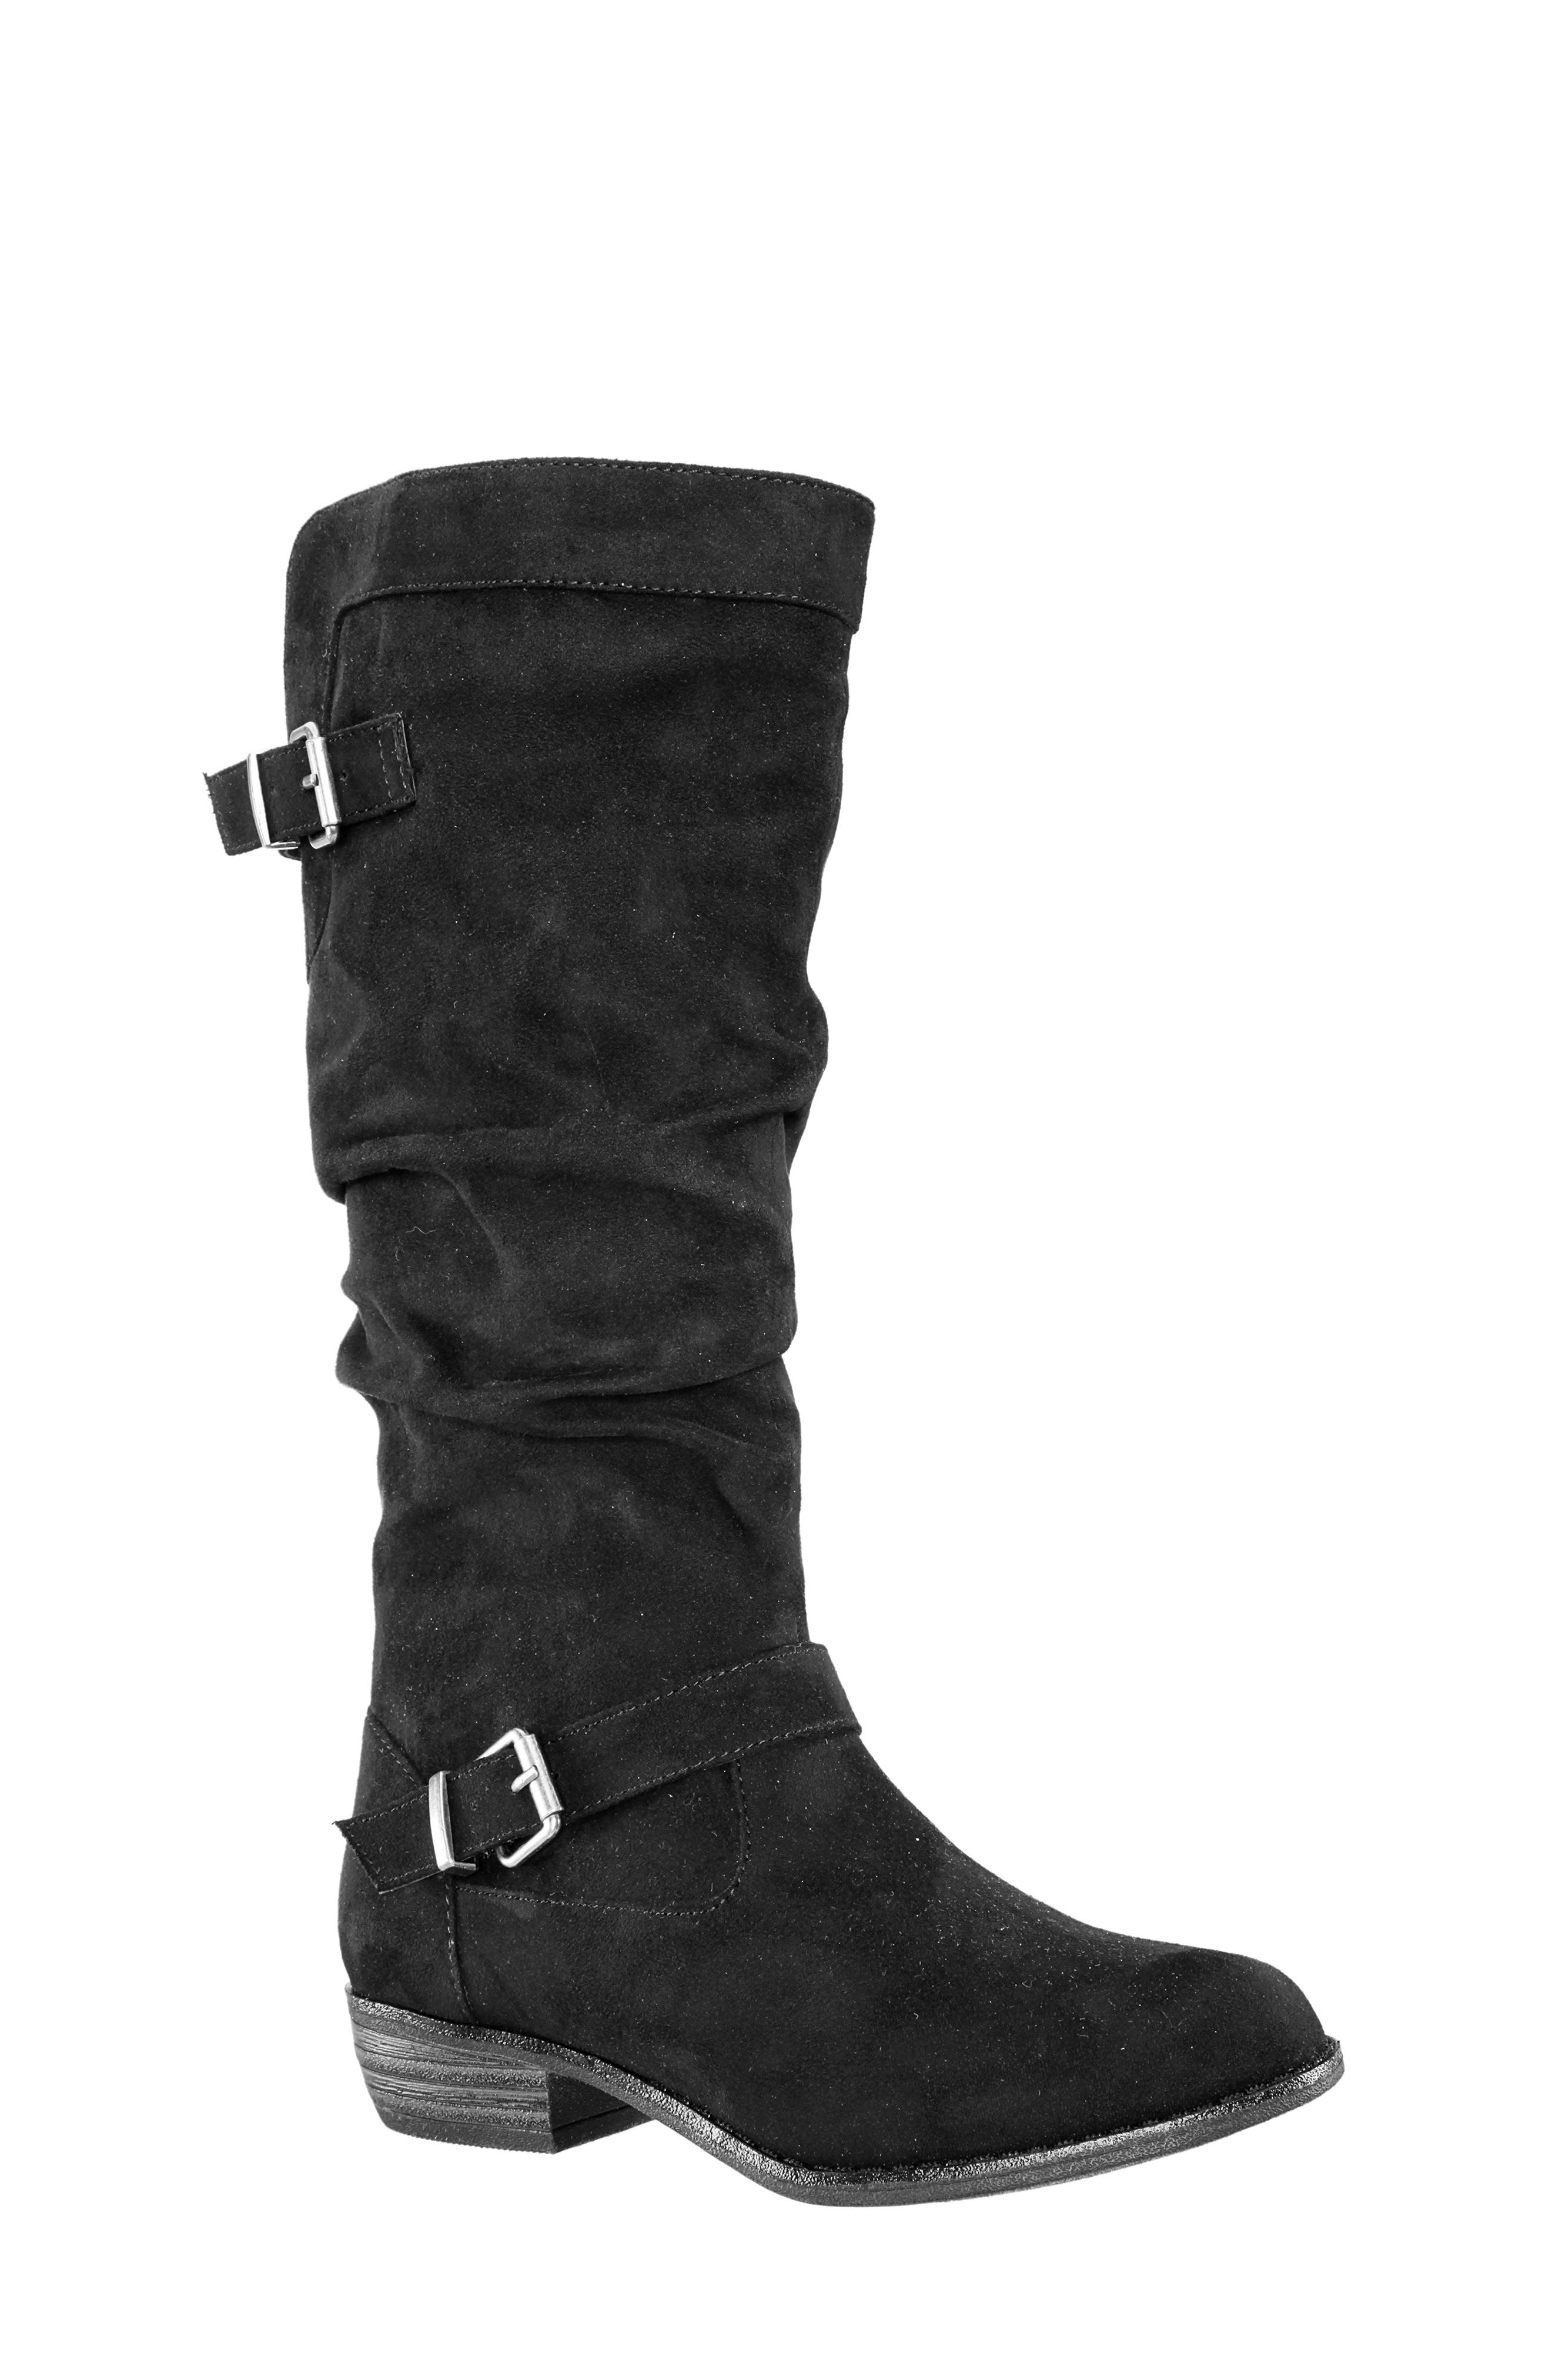 UPC 794378412762 product image for Girl's Nina Meris Slouch Boot, Size 4 M - Black | upcitemdb.com